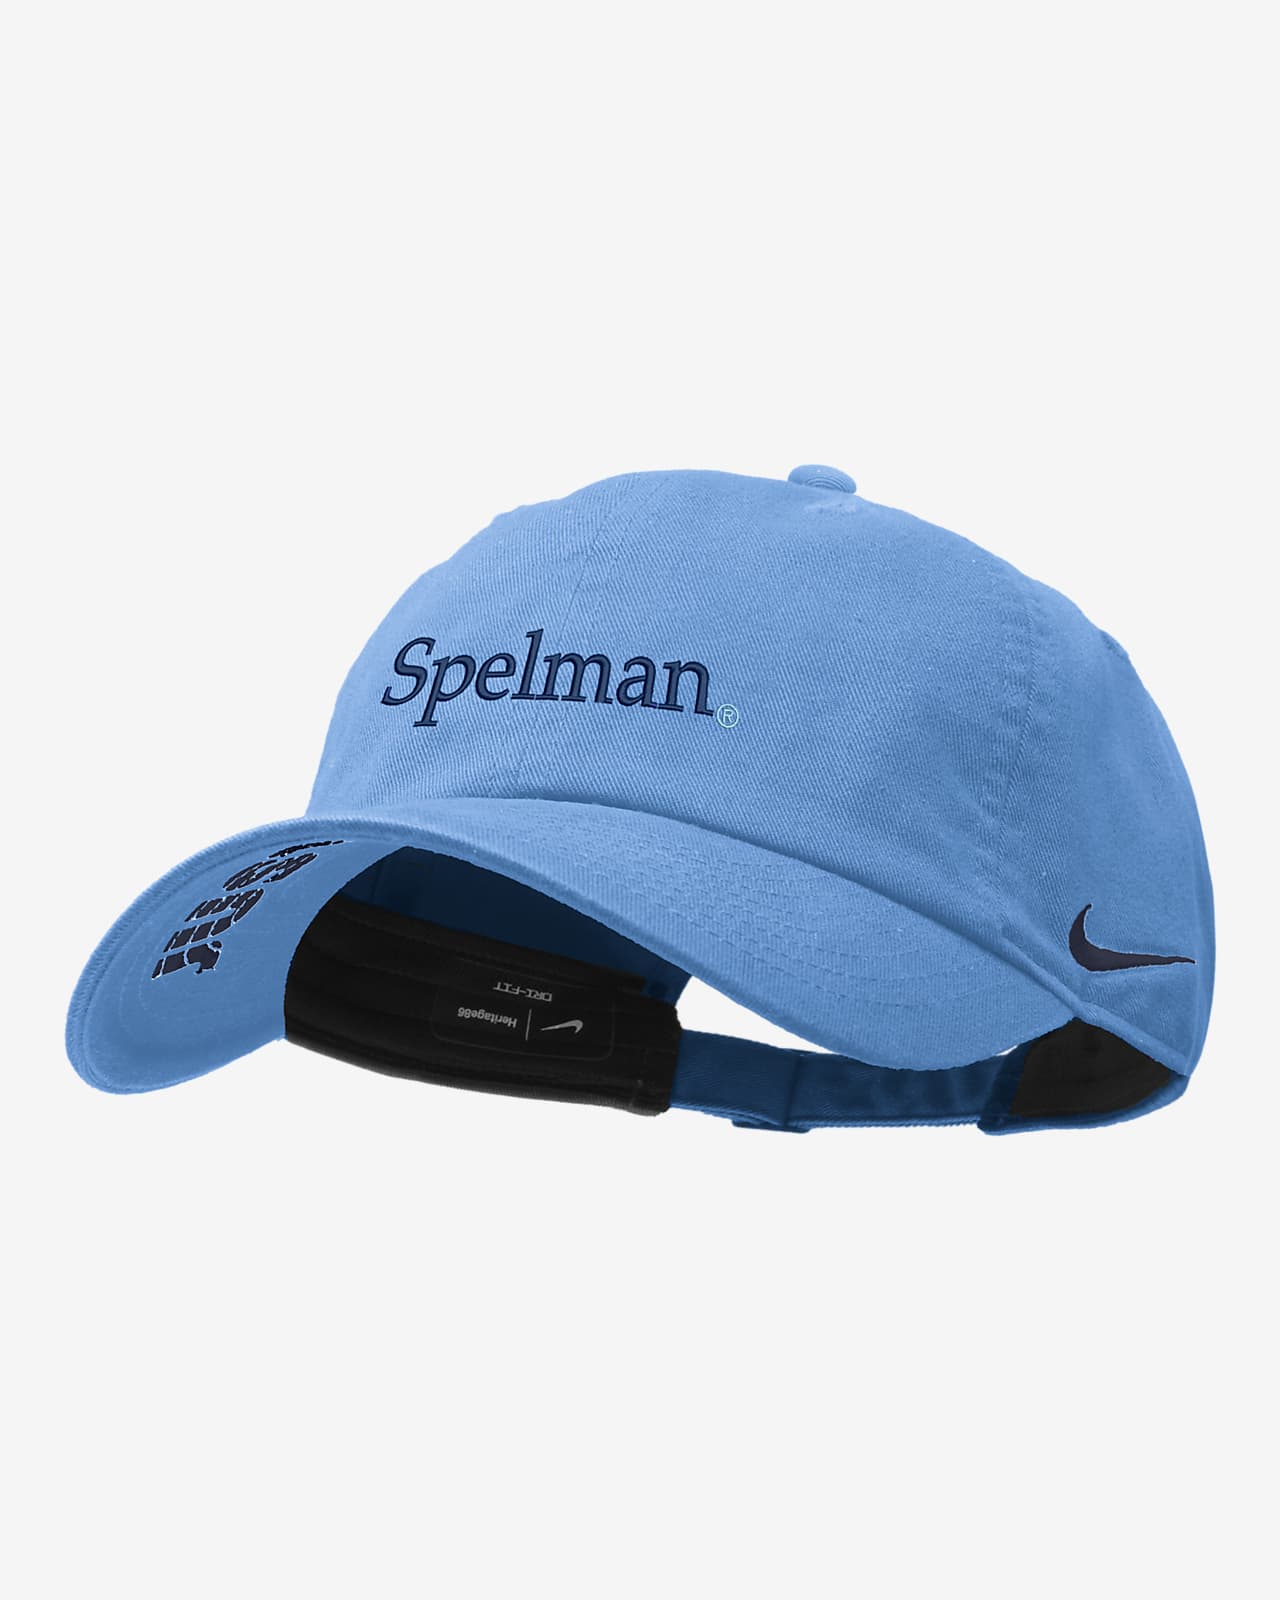 Gorra ajustable universitaria Nike Spelman